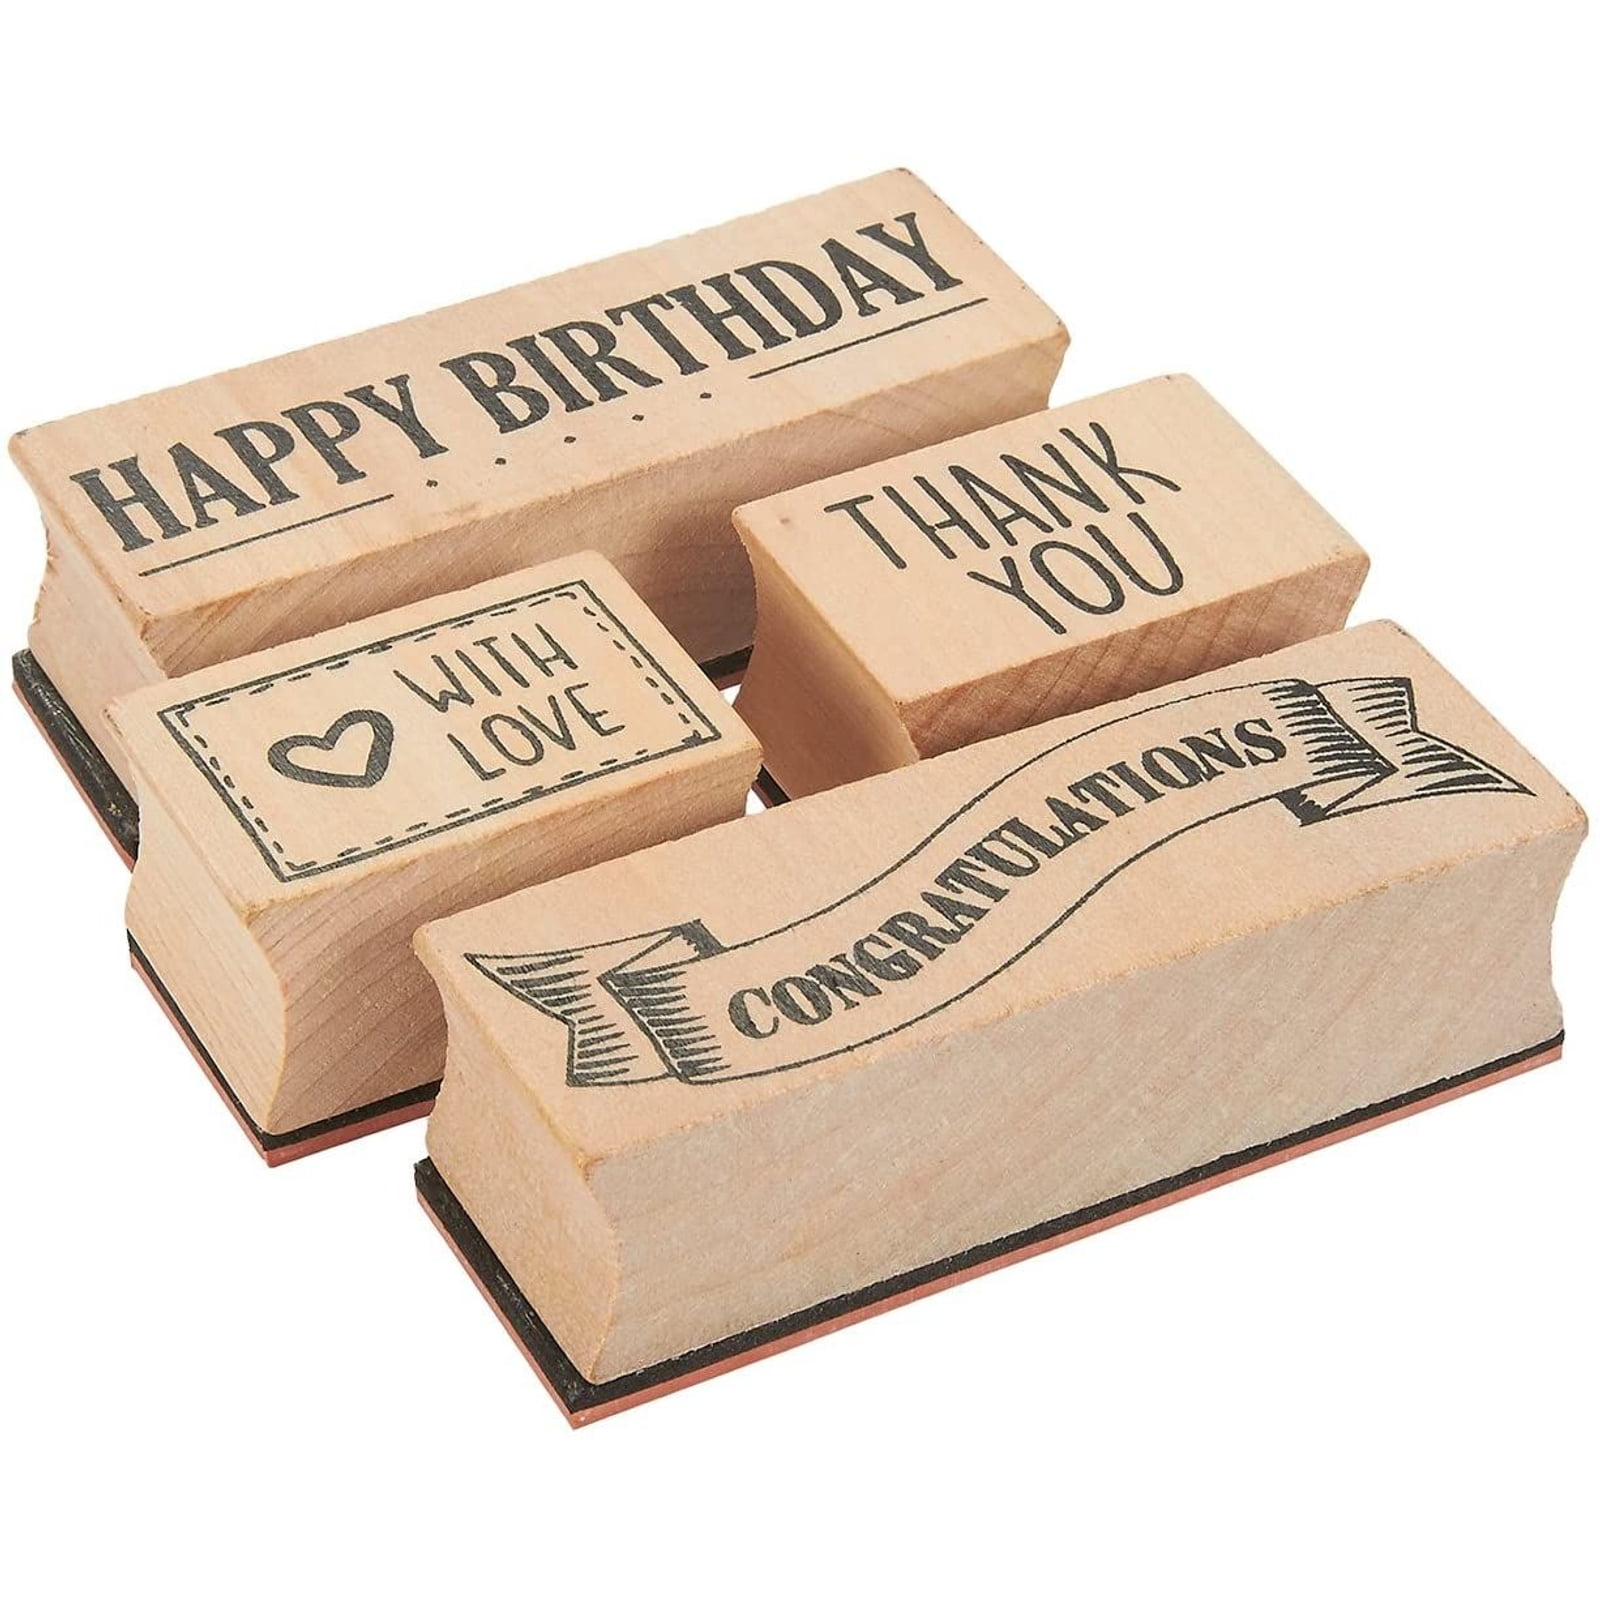 Happy birthday cake stamps seal scrapbooking album card decor diary diy craft ME 